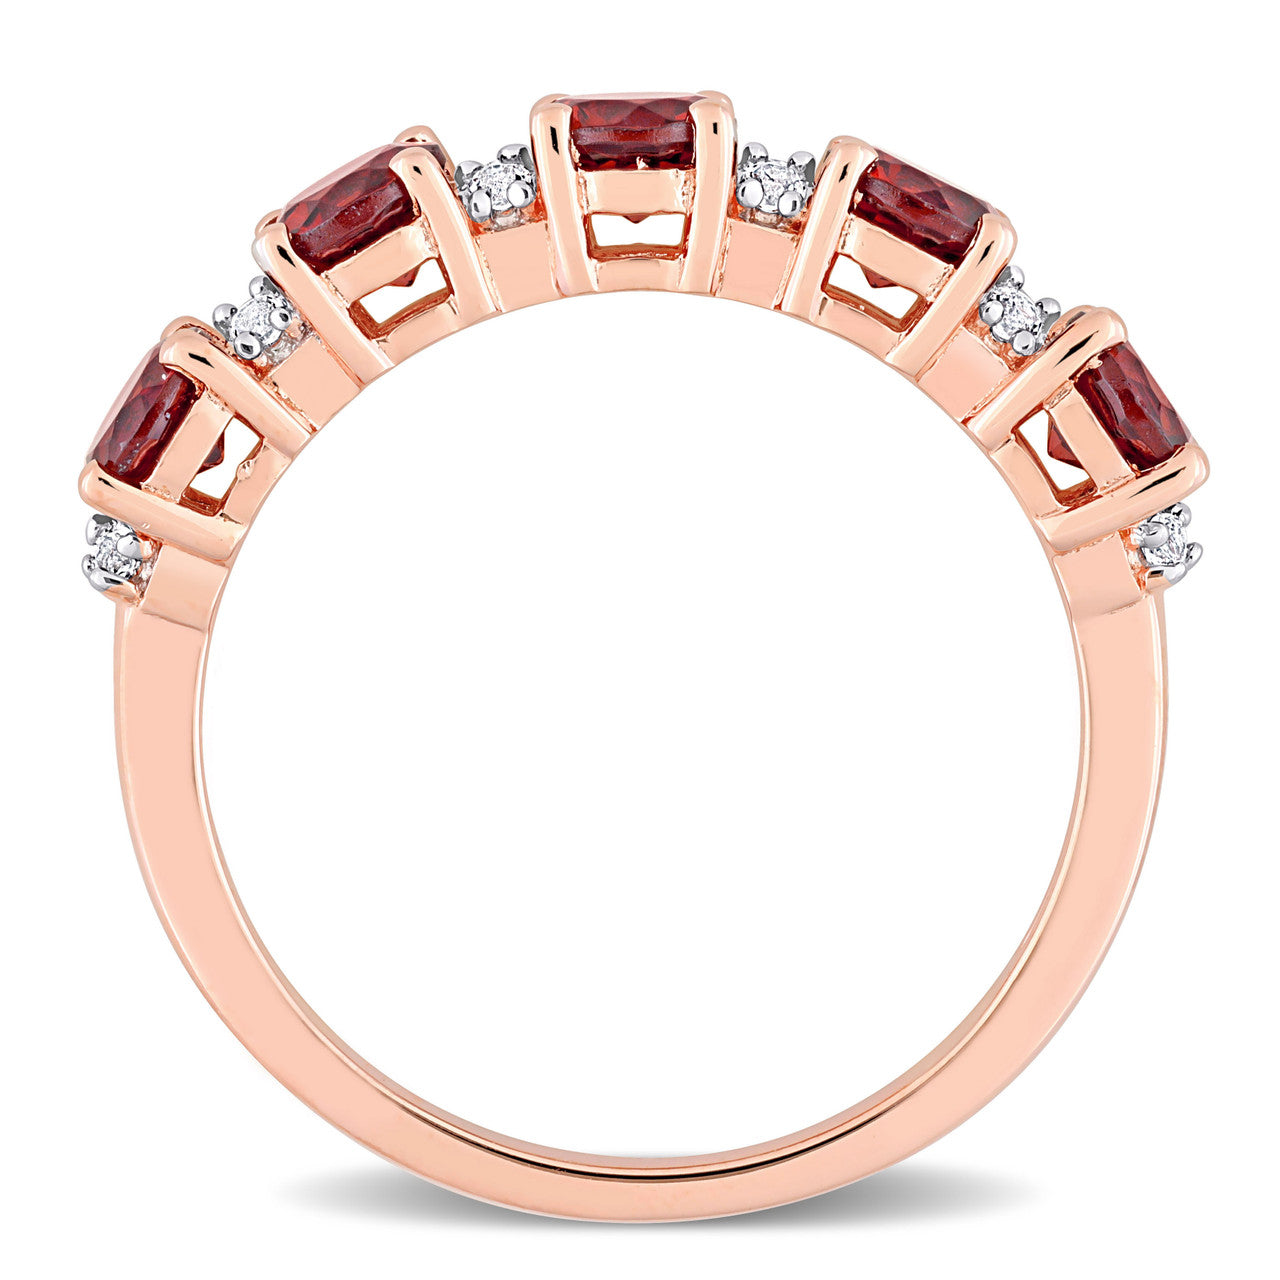 Ice Jewellery 1 3/5 CT TGW Garnet and White Topaz 5-Stone Ring in Pink Silver - 75000005422 | Ice Jewellery Australia